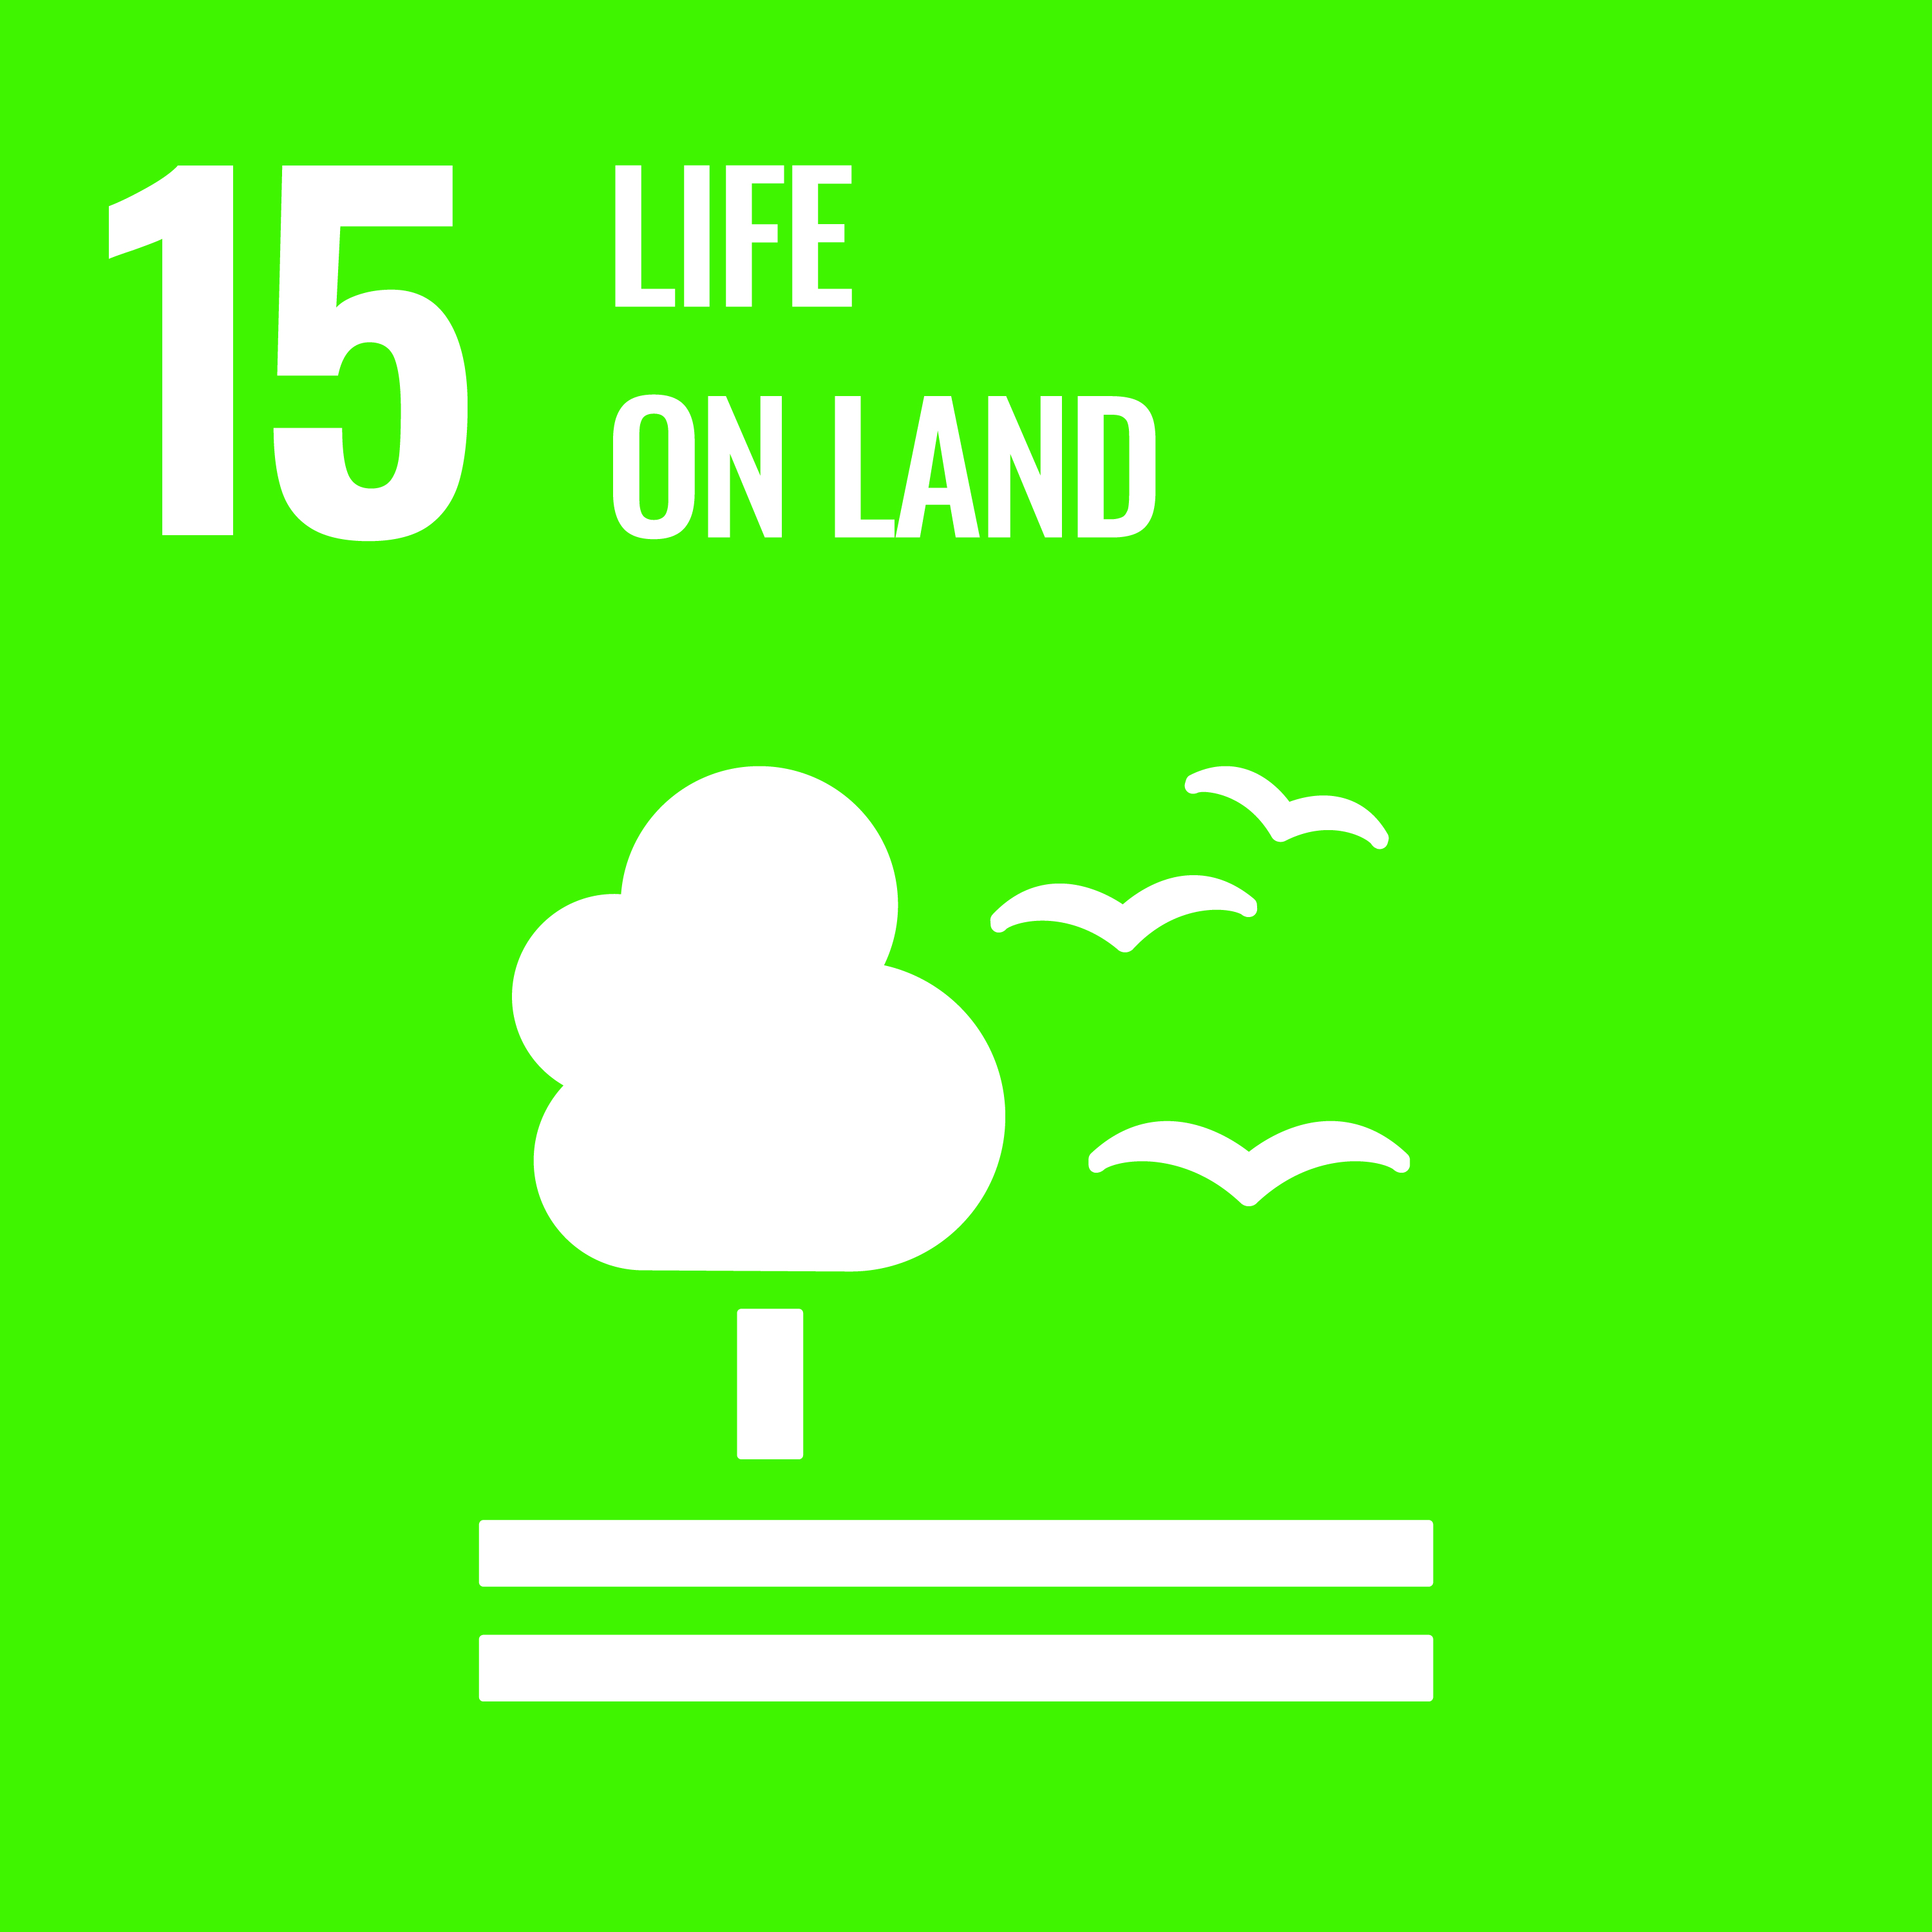 15 Life On Land (United Nations)